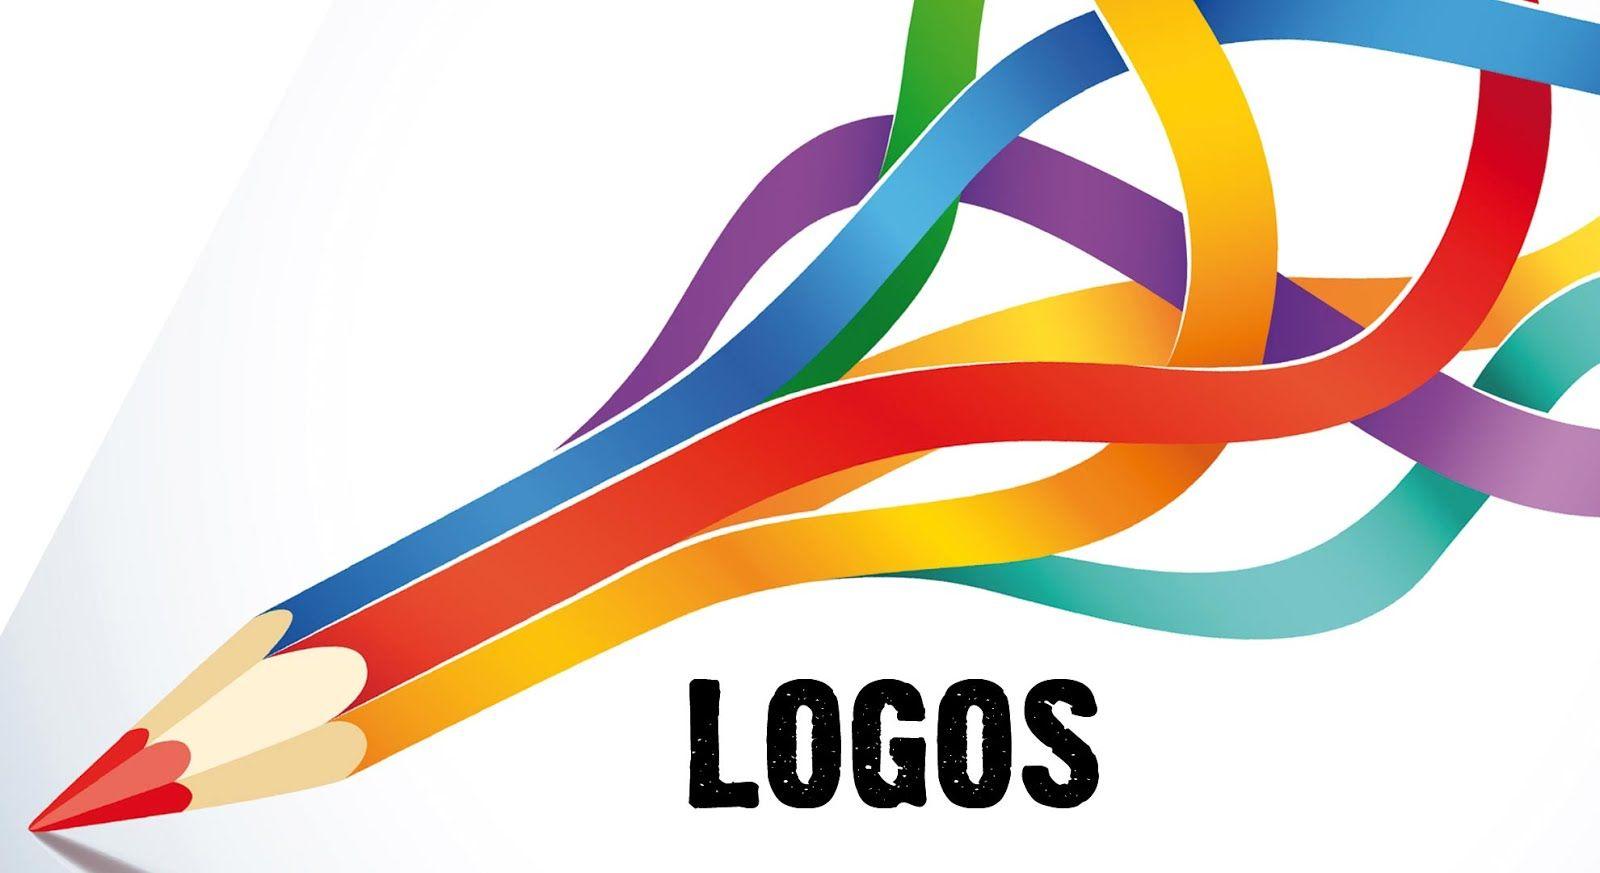 Excellent Logo - How to Make & Design An Excellent Logo